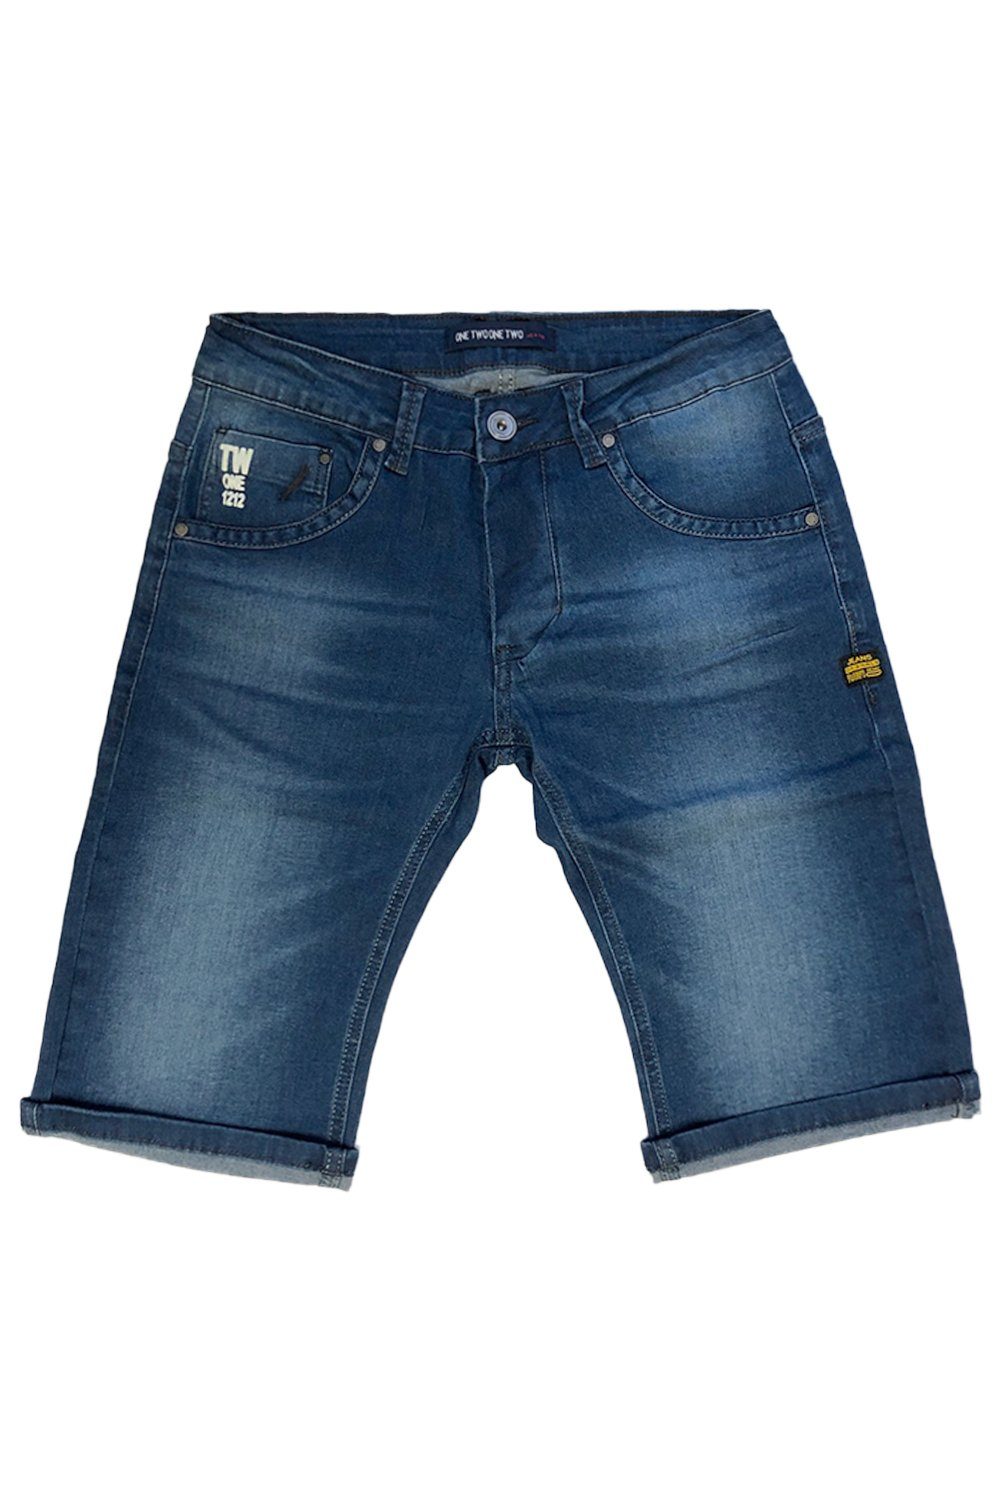 WANGUE Jeansshorts Jeans Shorts (1-tlg) Dunkelblau in Cargo 3238 Bermuda Sommer Kurze Hose